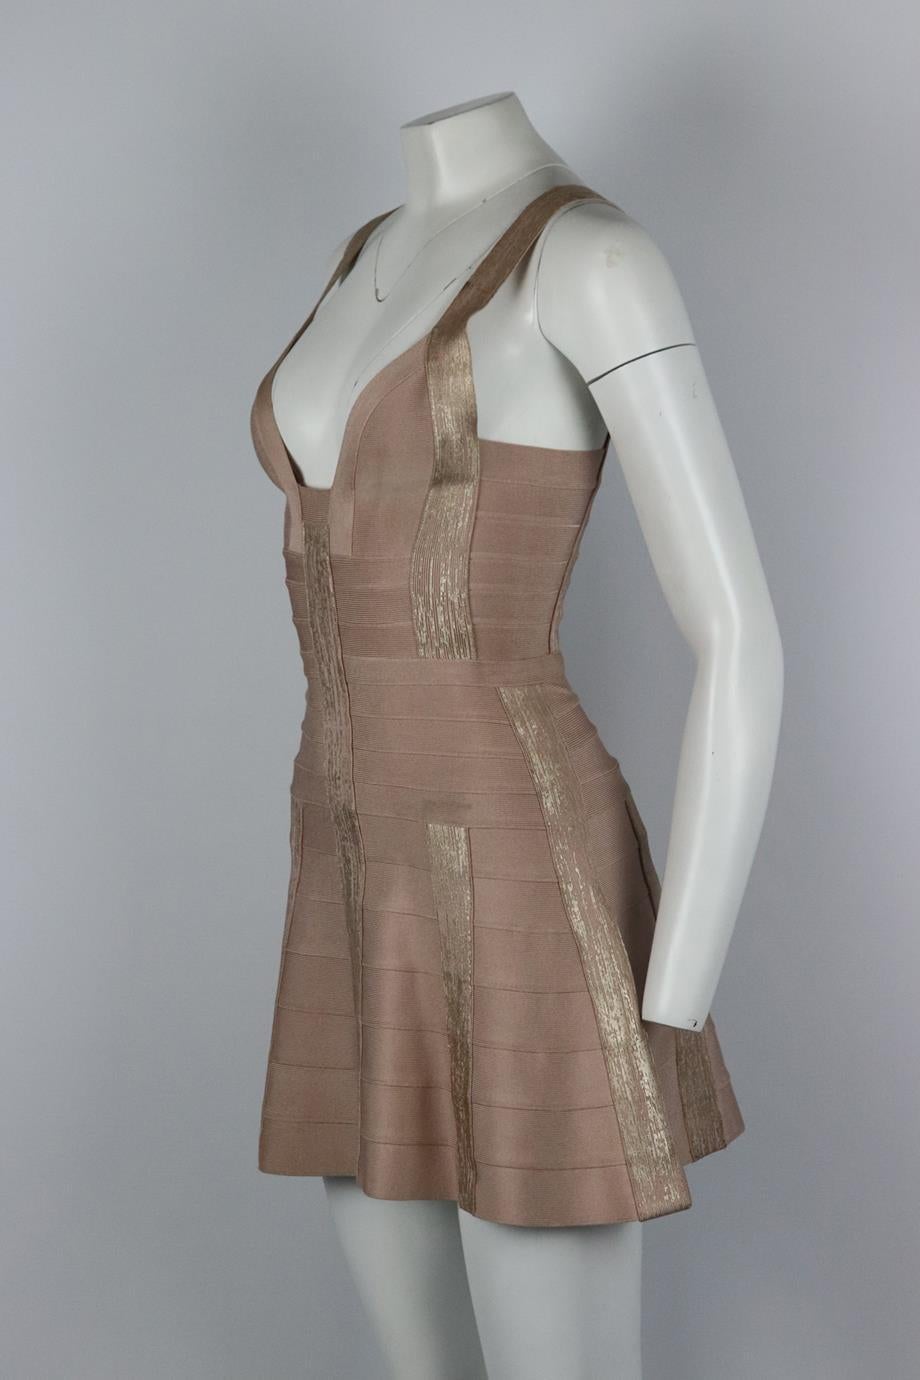 Brown Herve Leger Metallic Bandage Mini Dress Xsmall